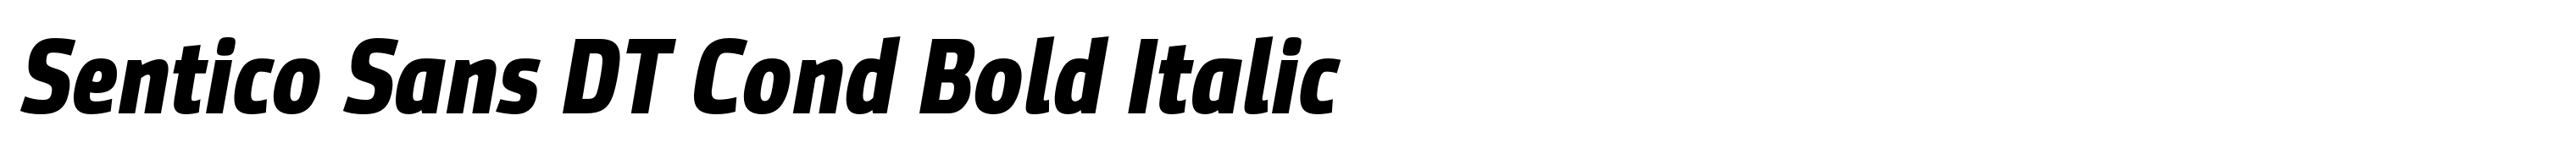 Sentico Sans DT Cond Bold Italic